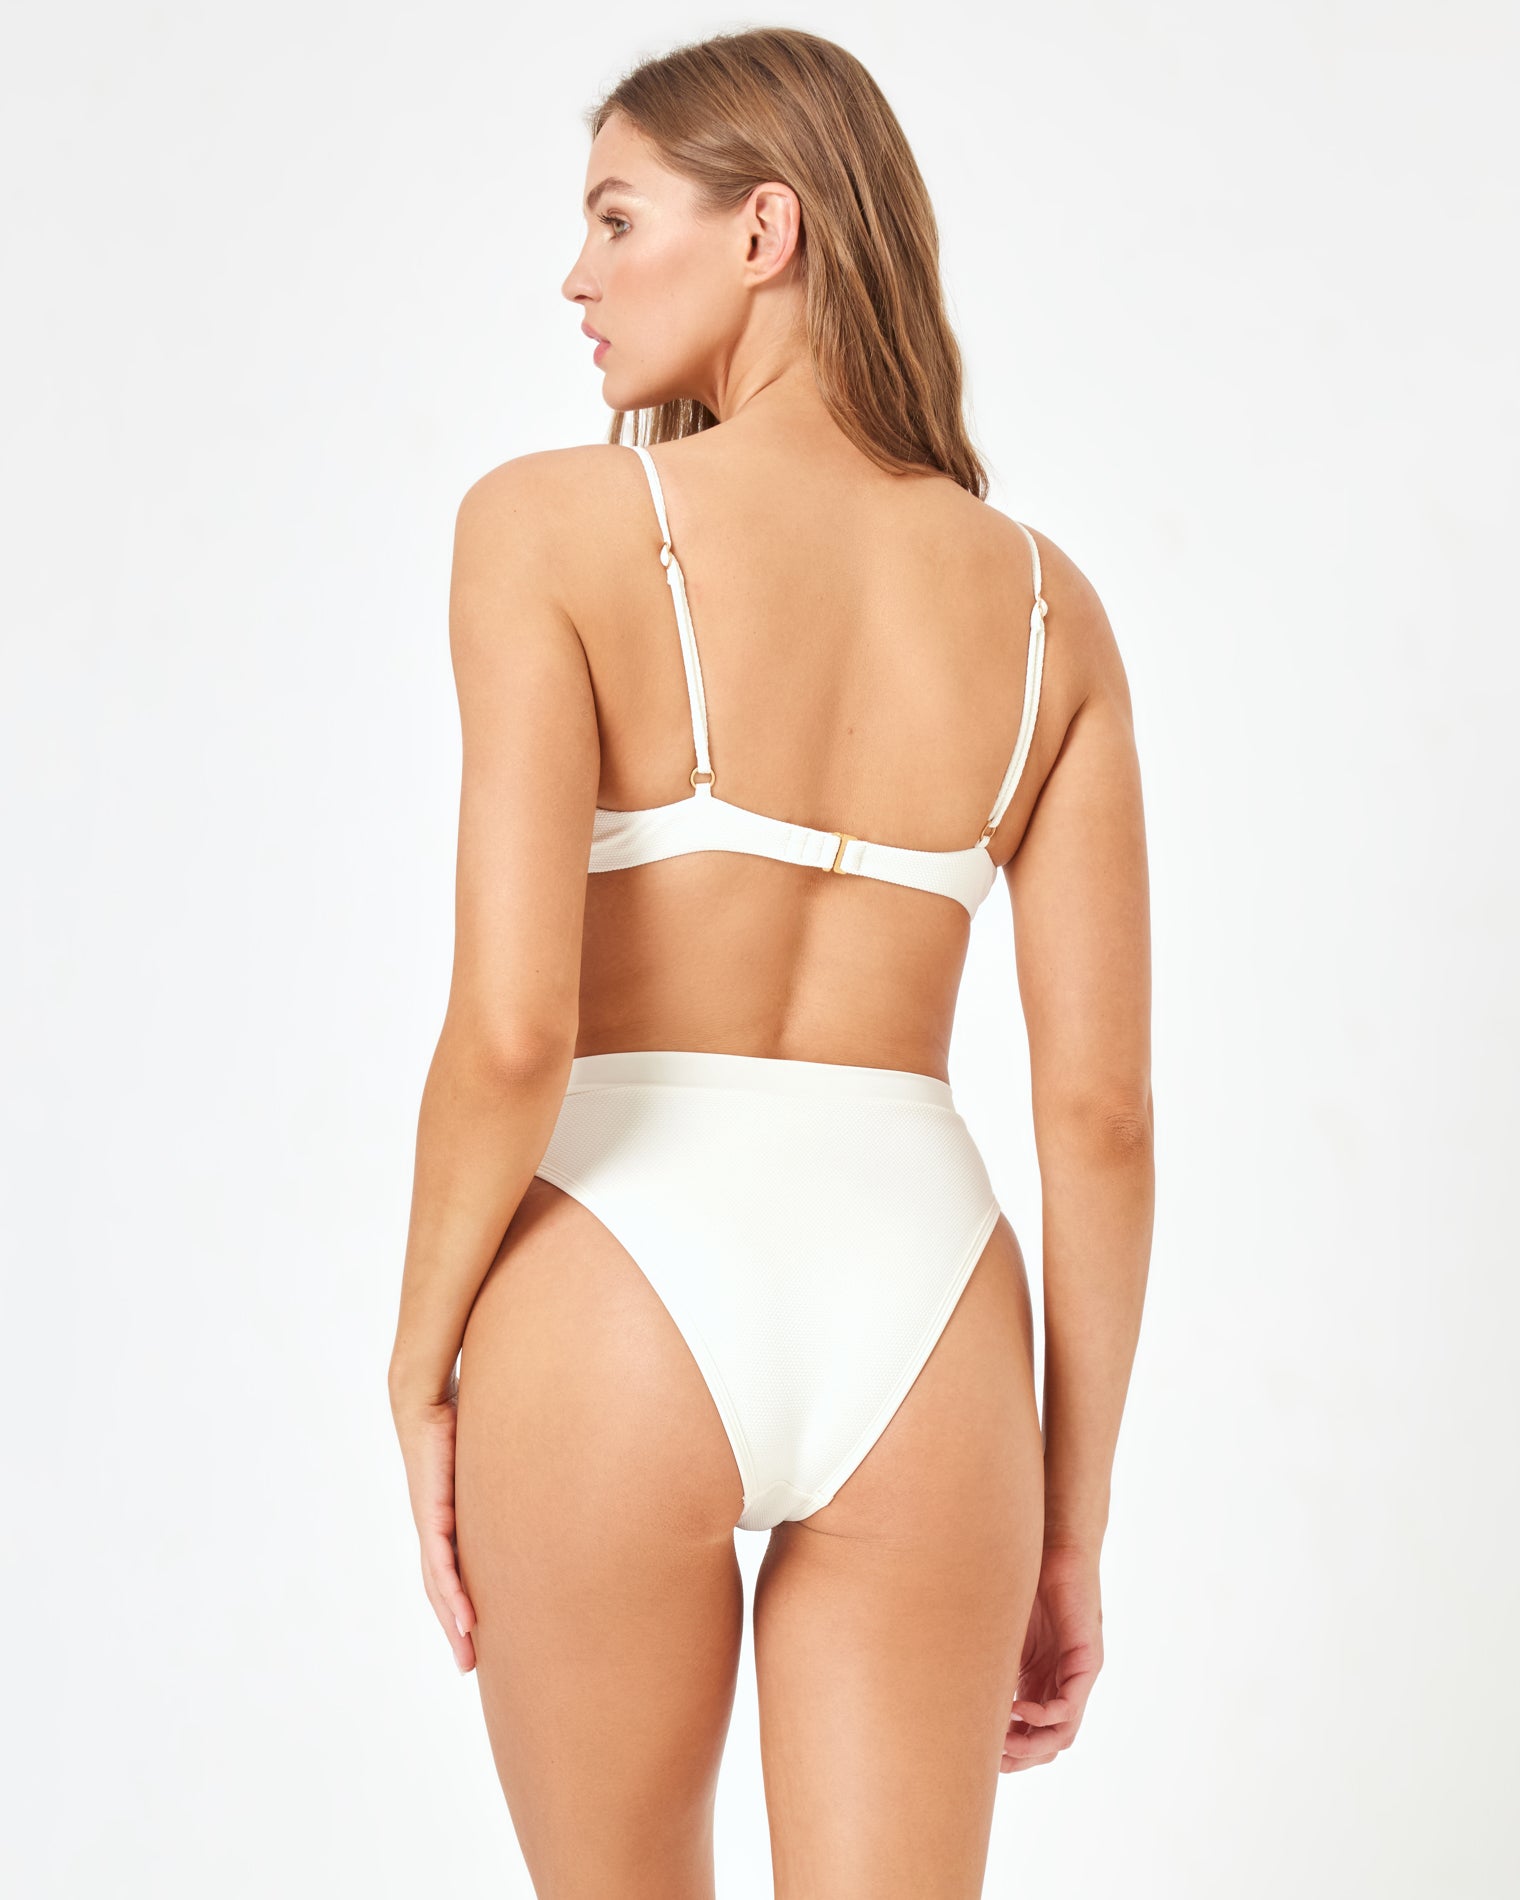 LSPACE X Anthropologie Sunrise Shell Bikini Top - Cream Cream | Model: Daria (size: S)